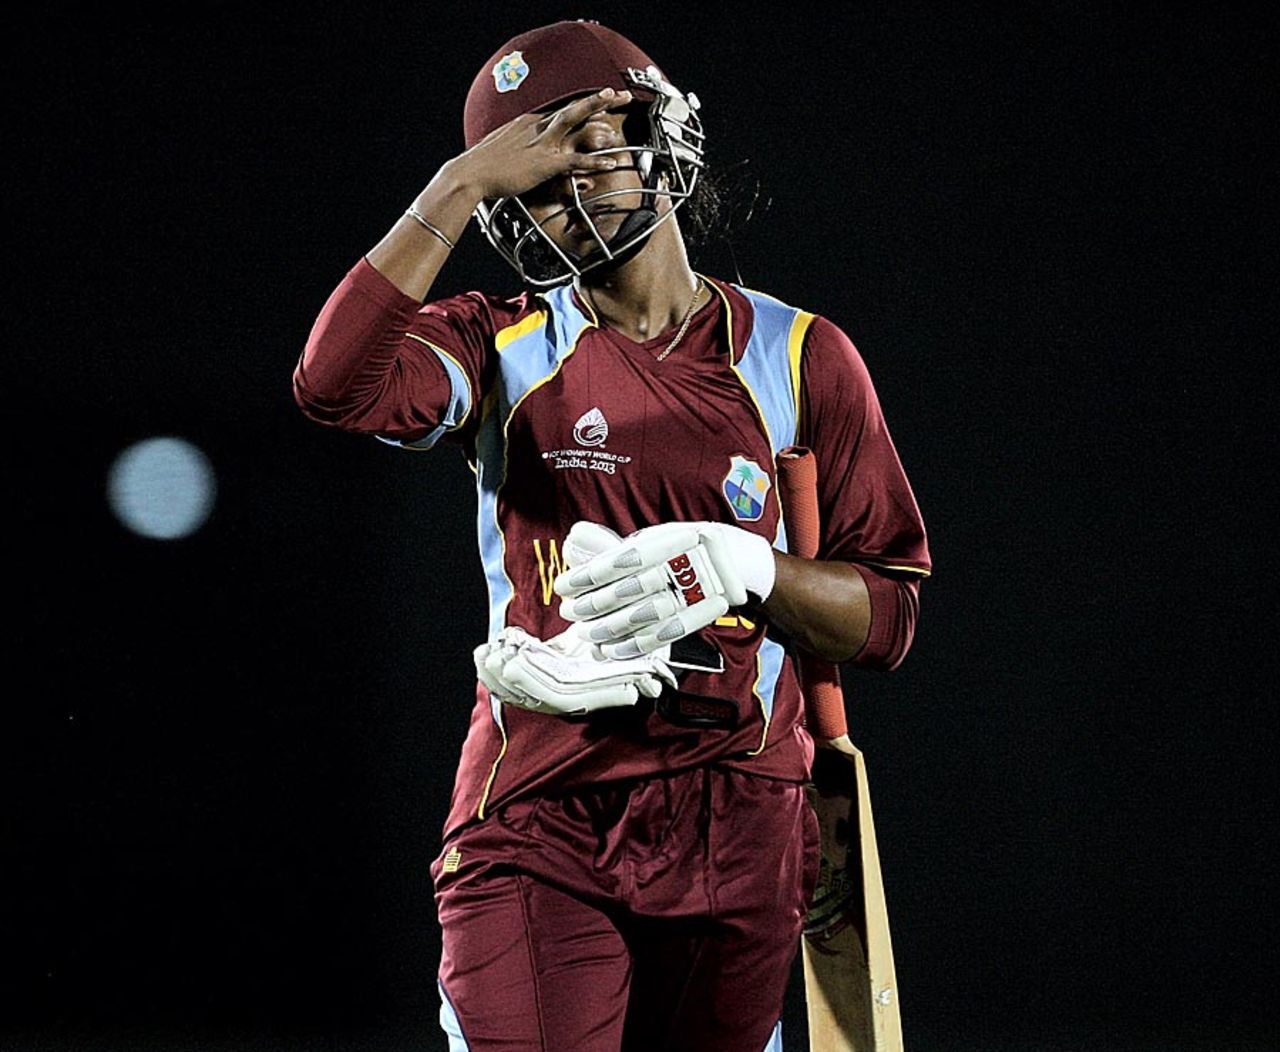 Merissa Aguilleira walks back after being bowled, Australia v West Indies, Final, Women's World Cup 2013, Mumbai, February 17, 2013